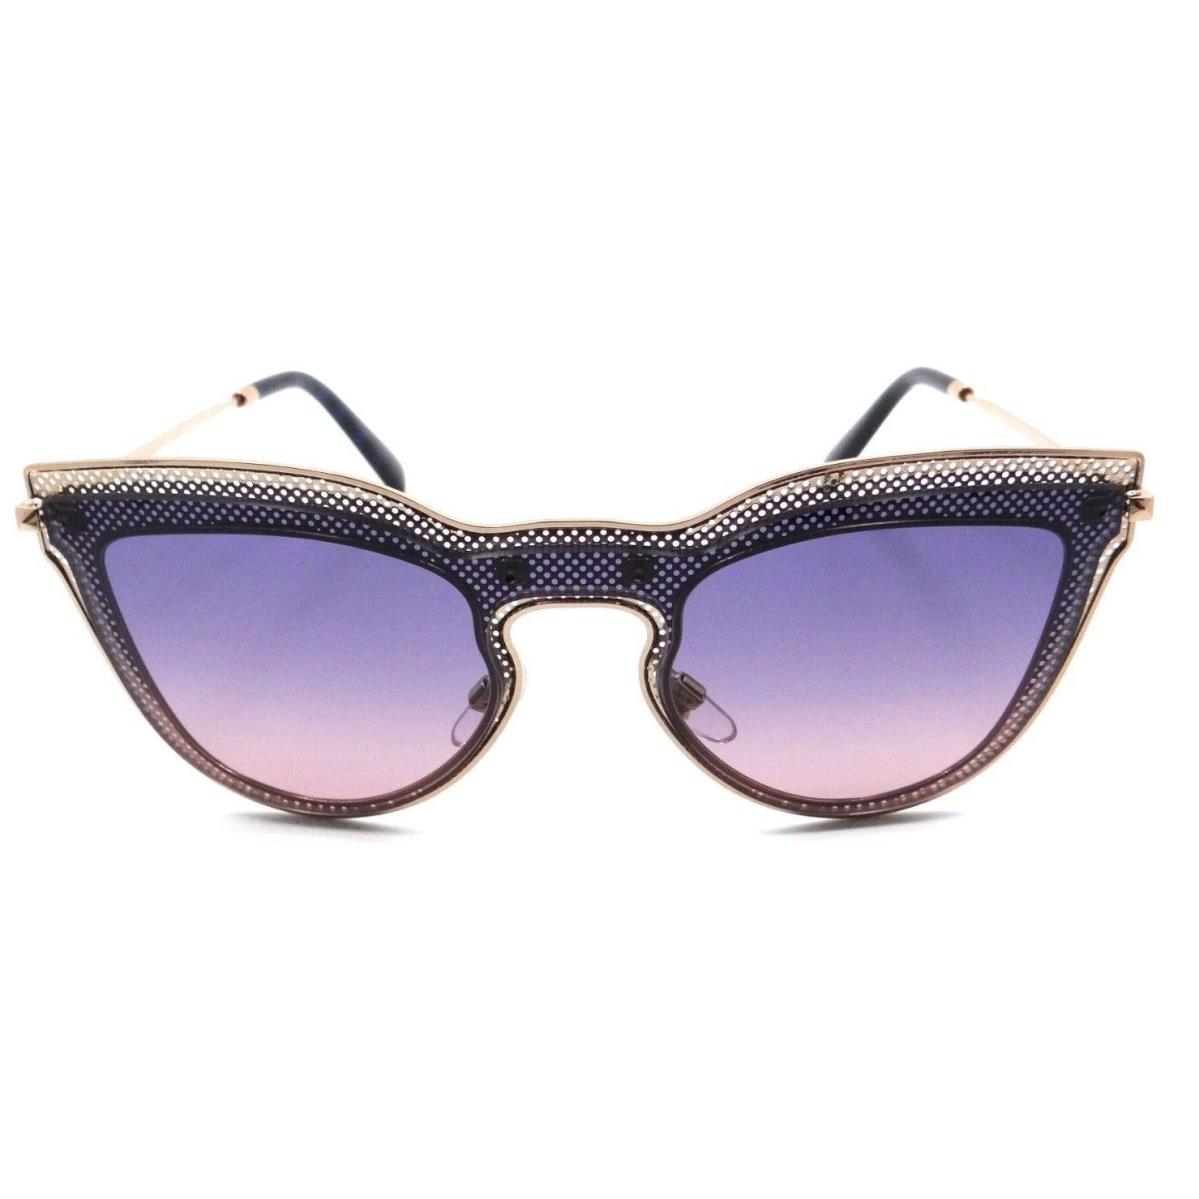 Valentino Sunglasses VA 2018 3004/I6 33-xx-140 Rose Gold / Blue Pink Gradient